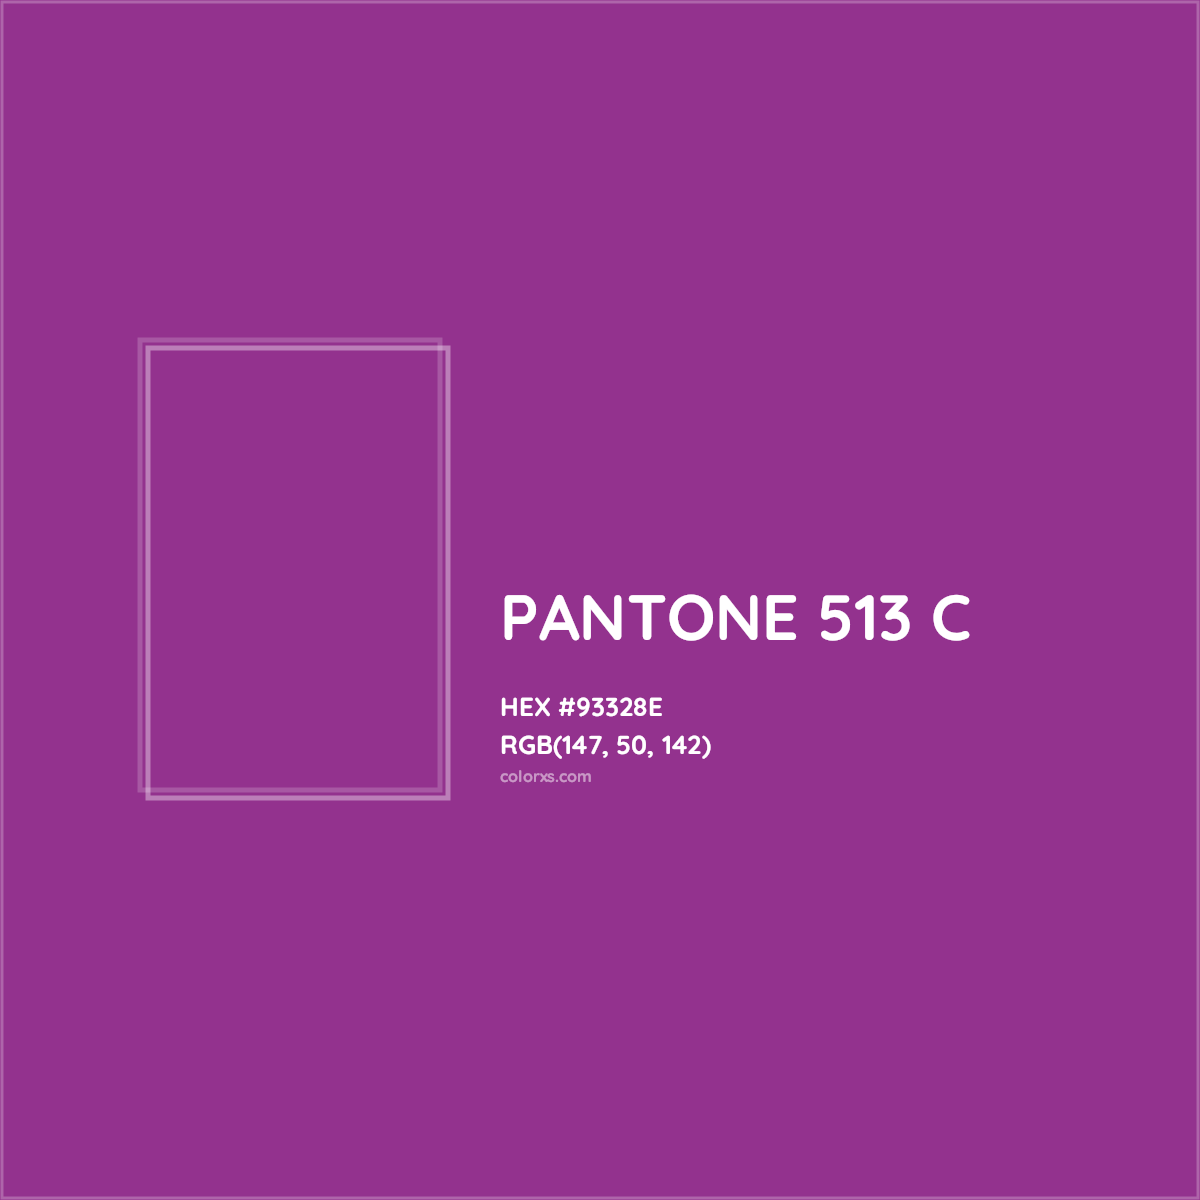 HEX #93328E PANTONE 513 C CMS Pantone PMS - Color Code